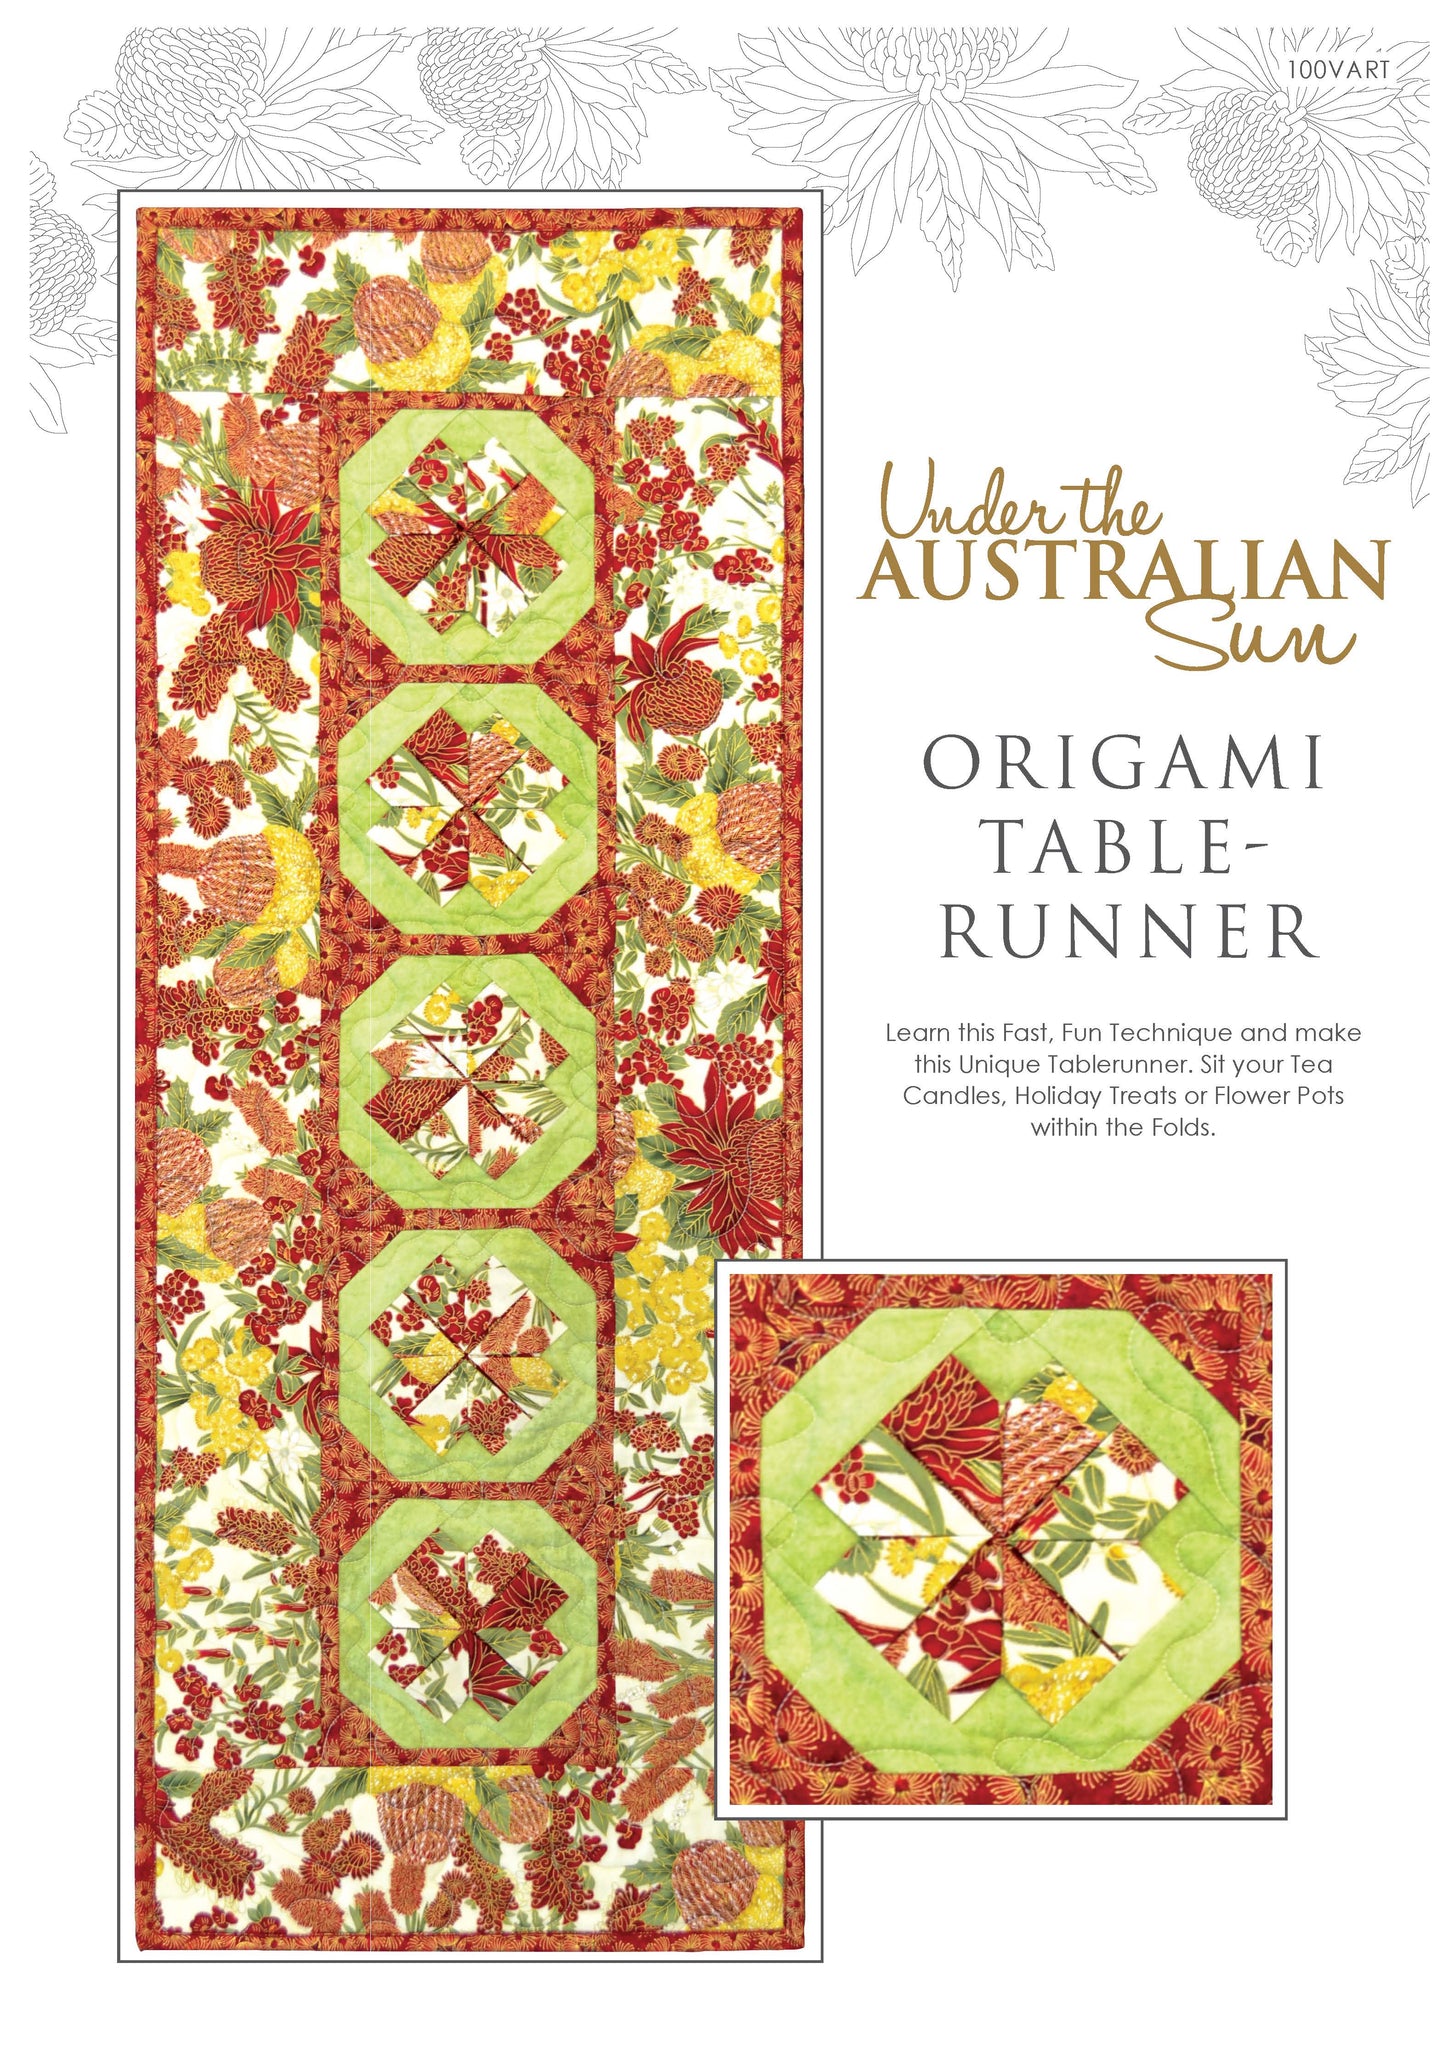 Aussie Origami Table Runner